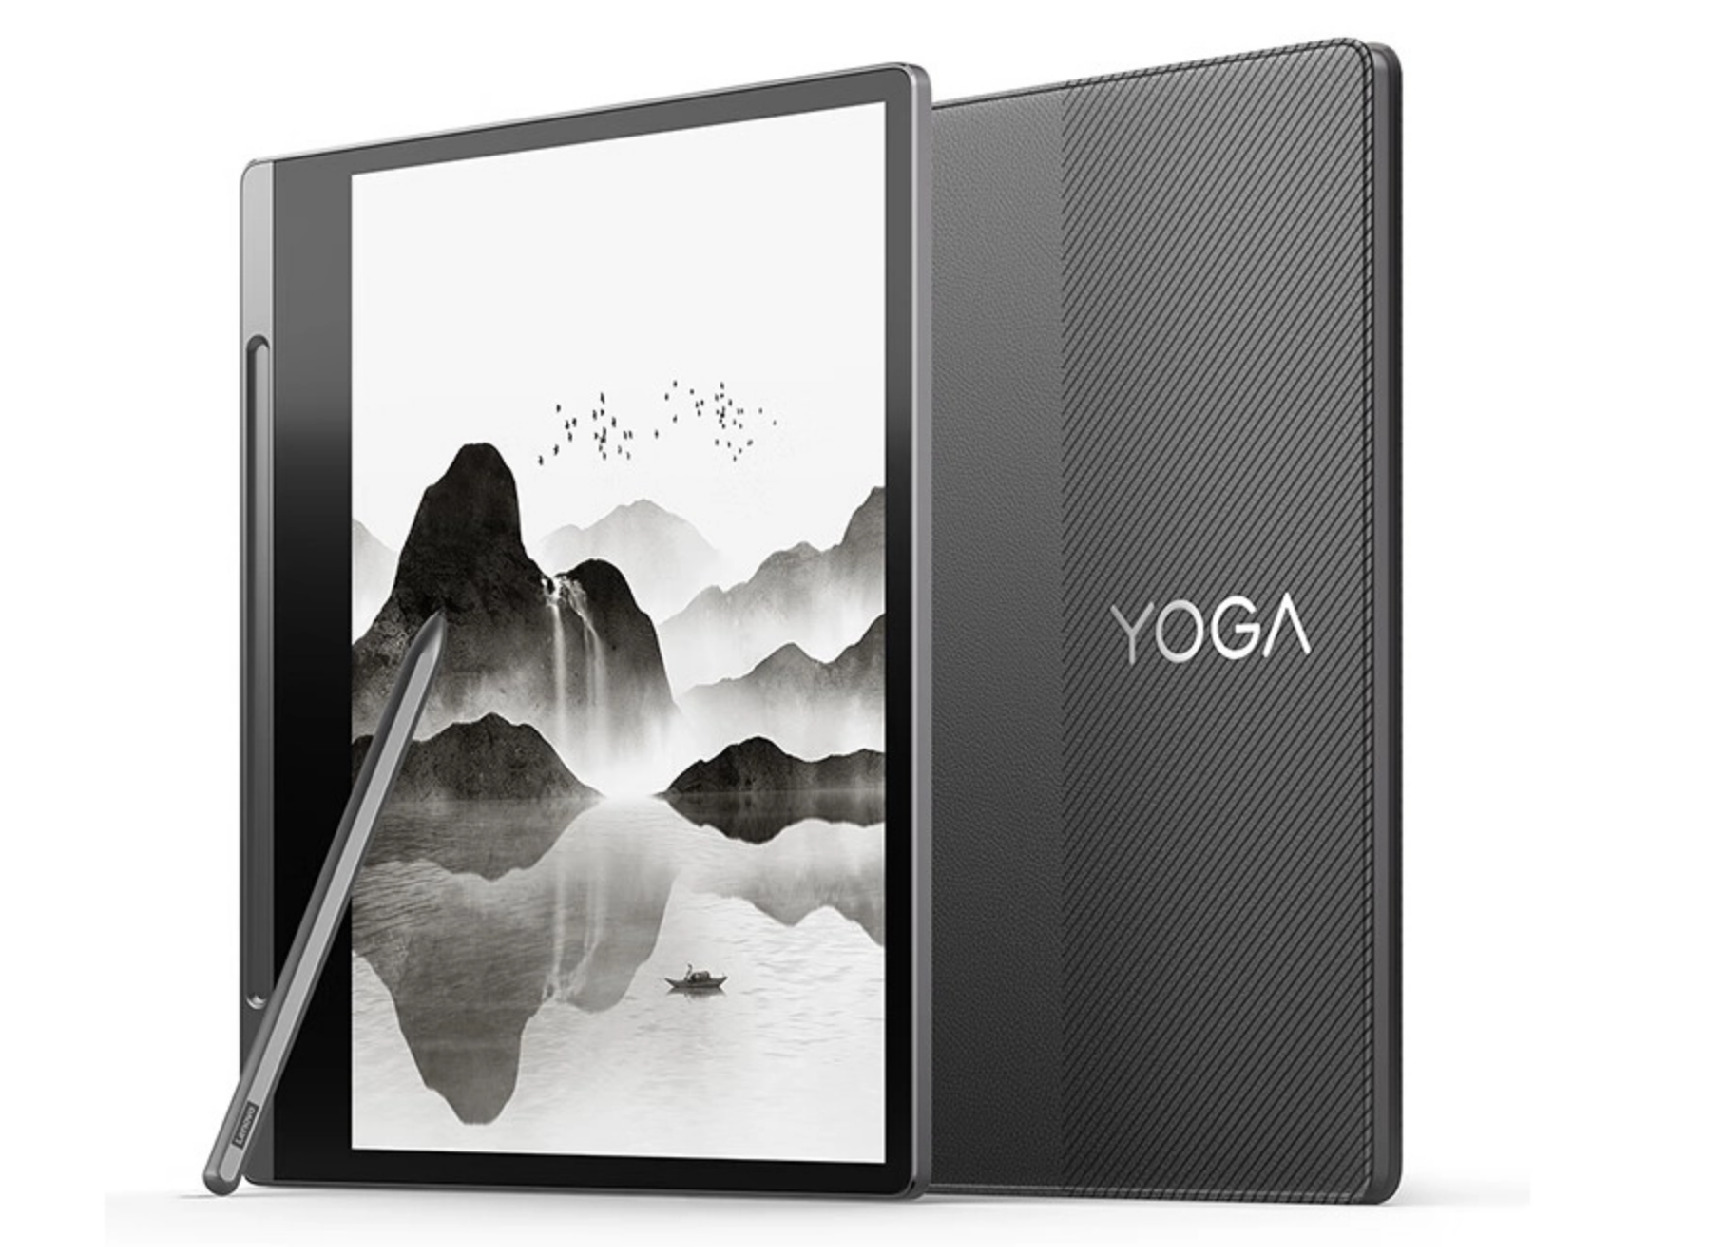 Lenovo Yoga Paper E Ink tablet now on pre-order